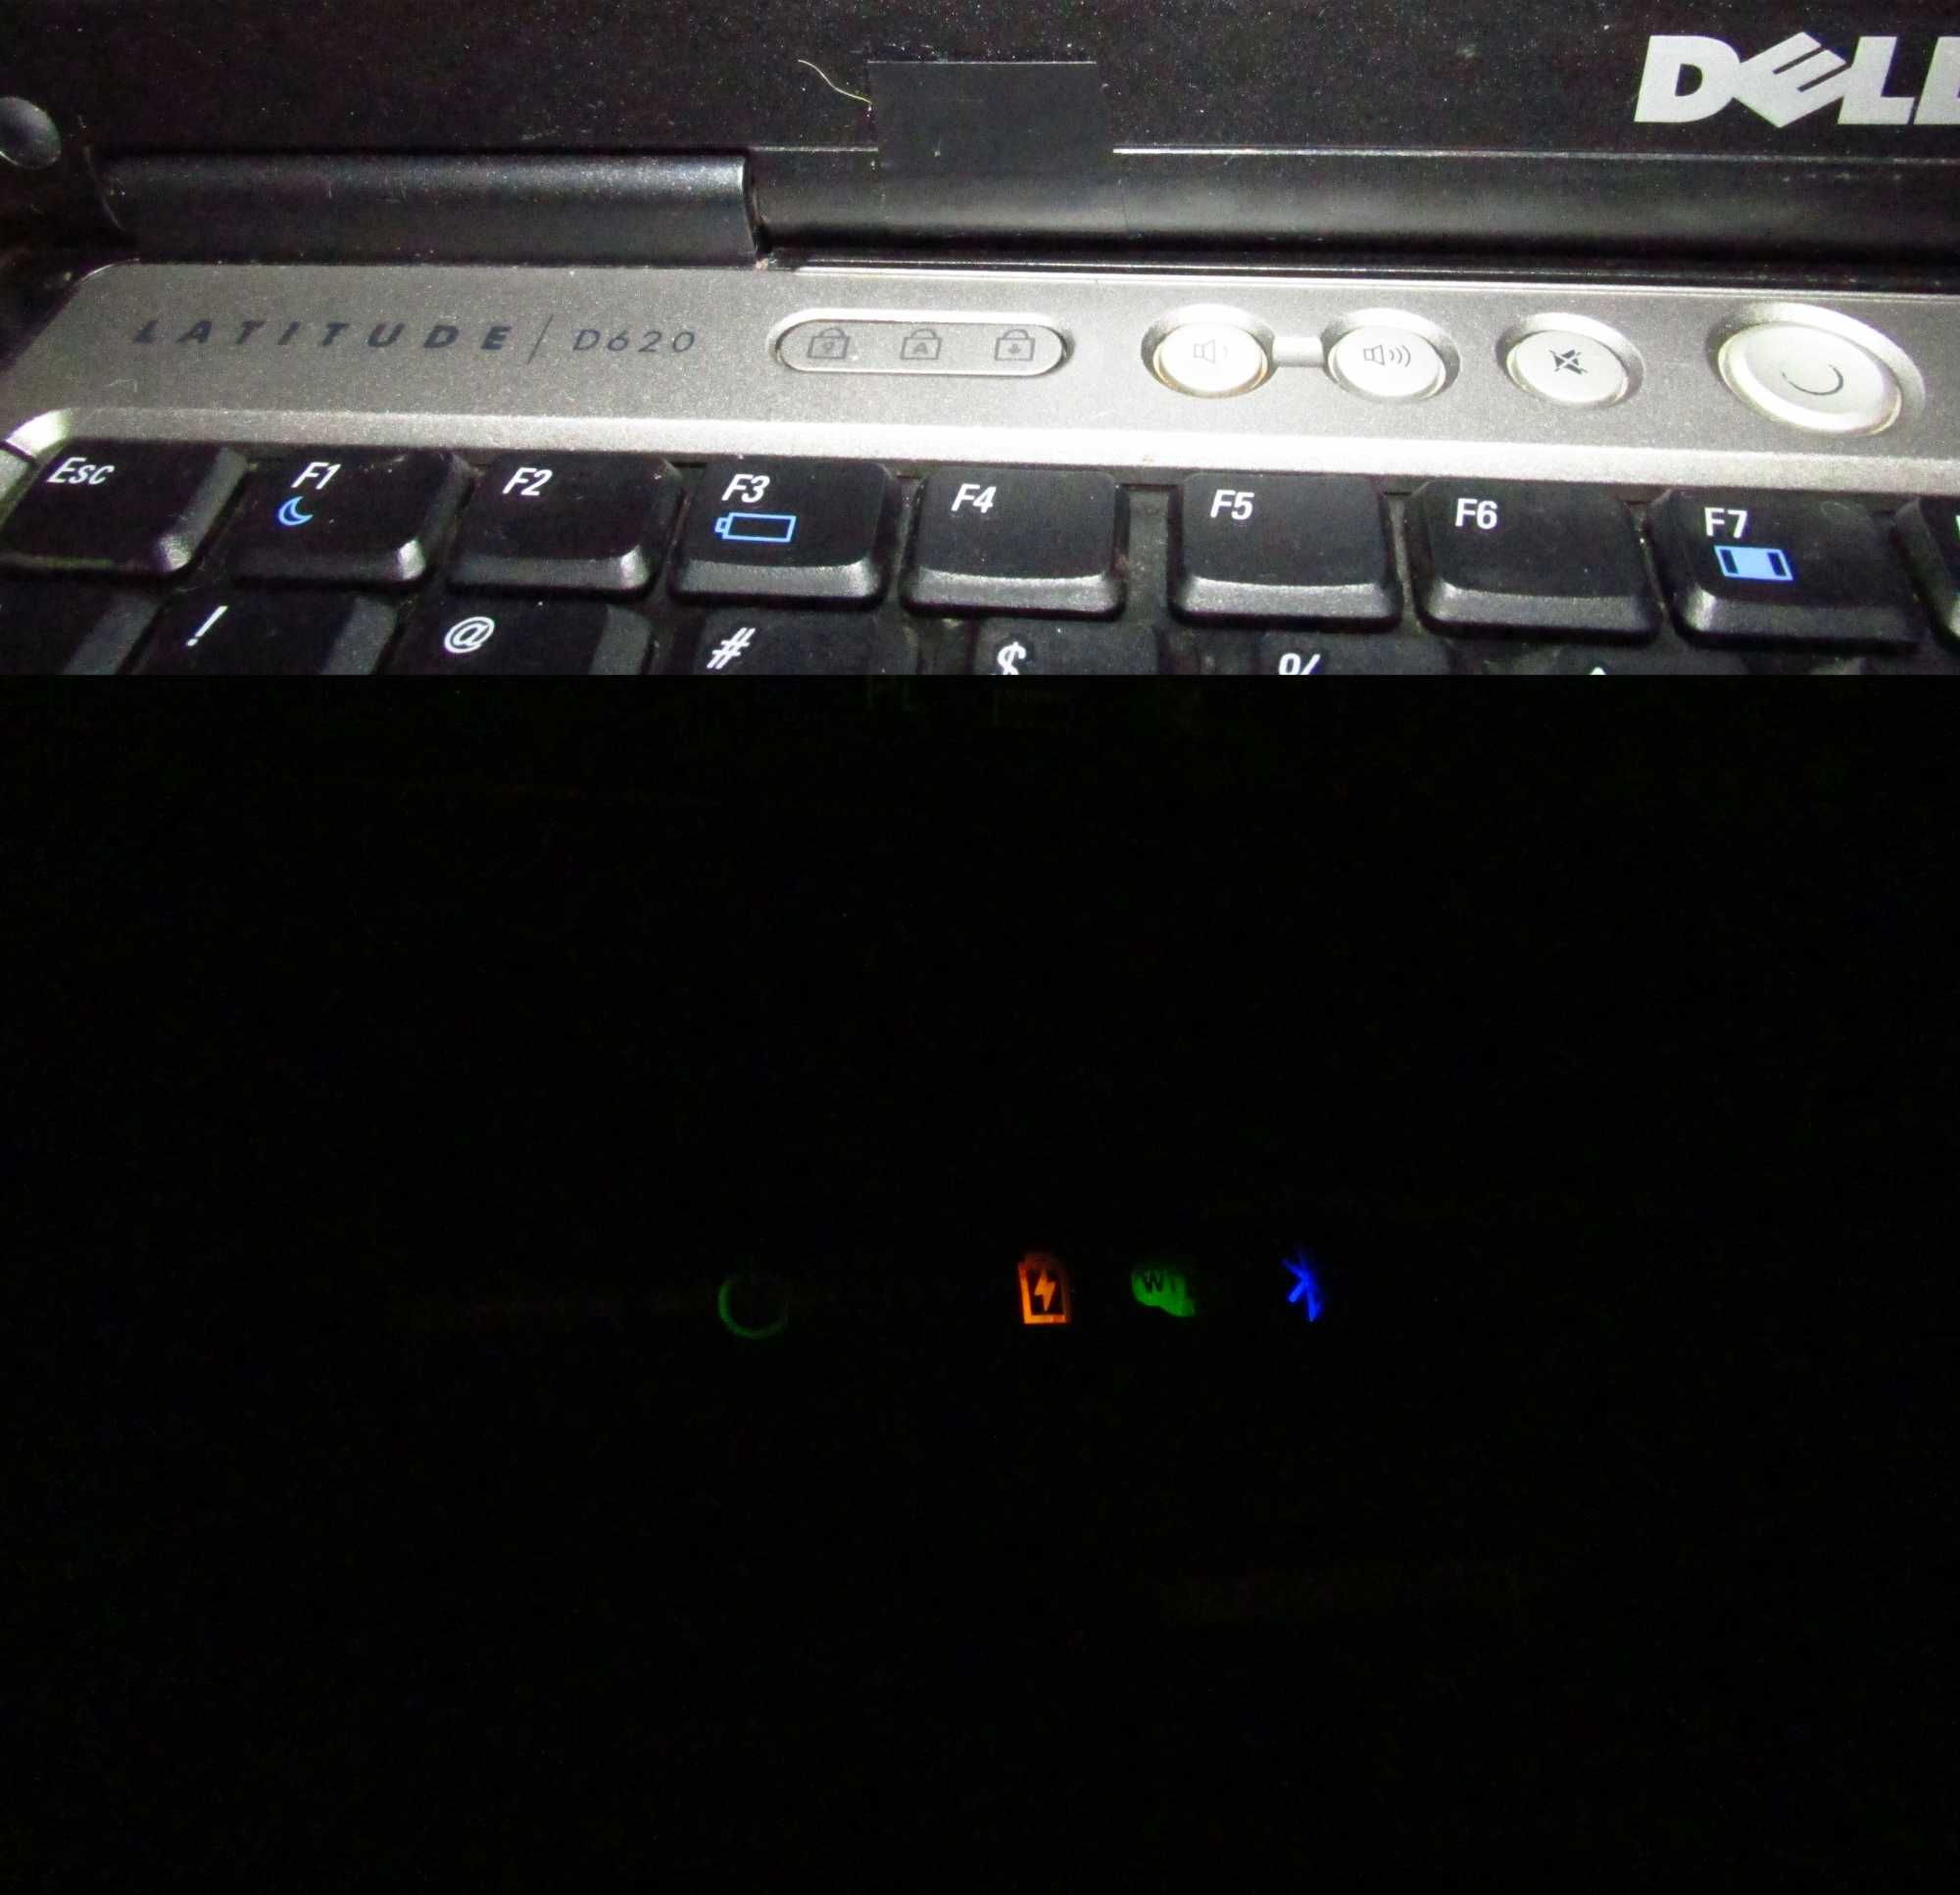 Laptop Dell Latitude D620 Core 2 Duo 1,83 GHz, 14,1", 1GB/60GB